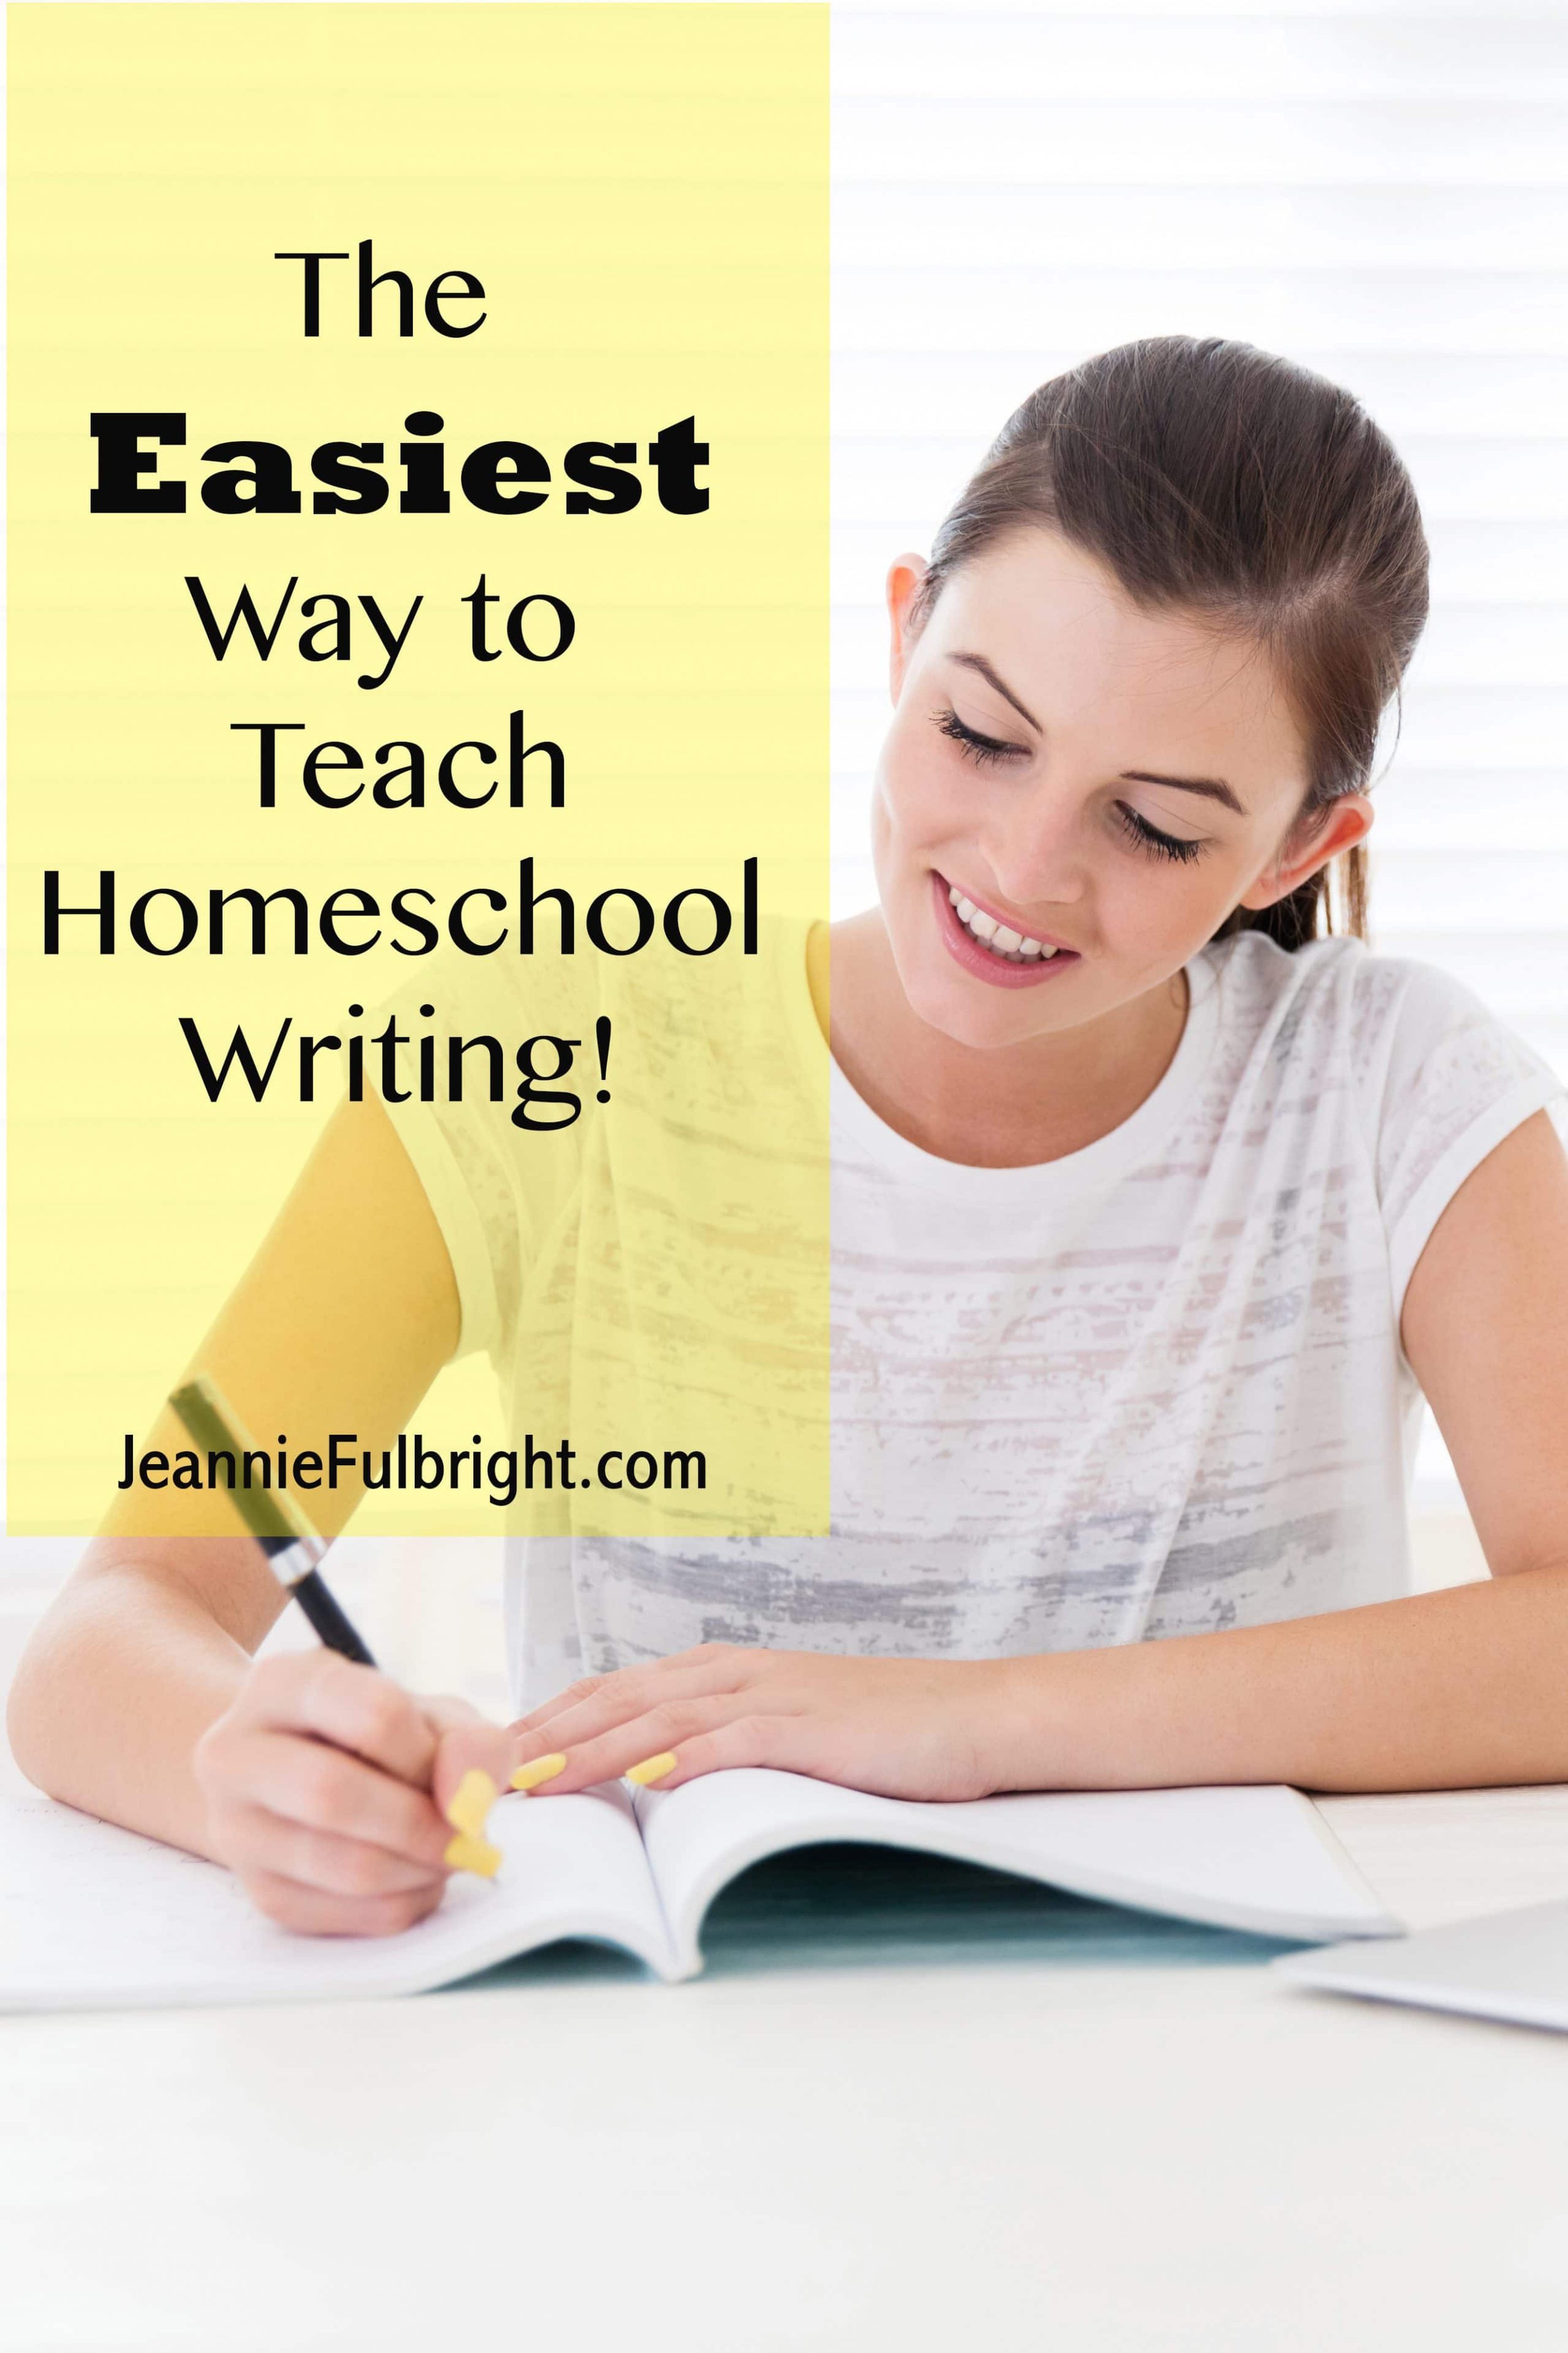 Homeschool student writing